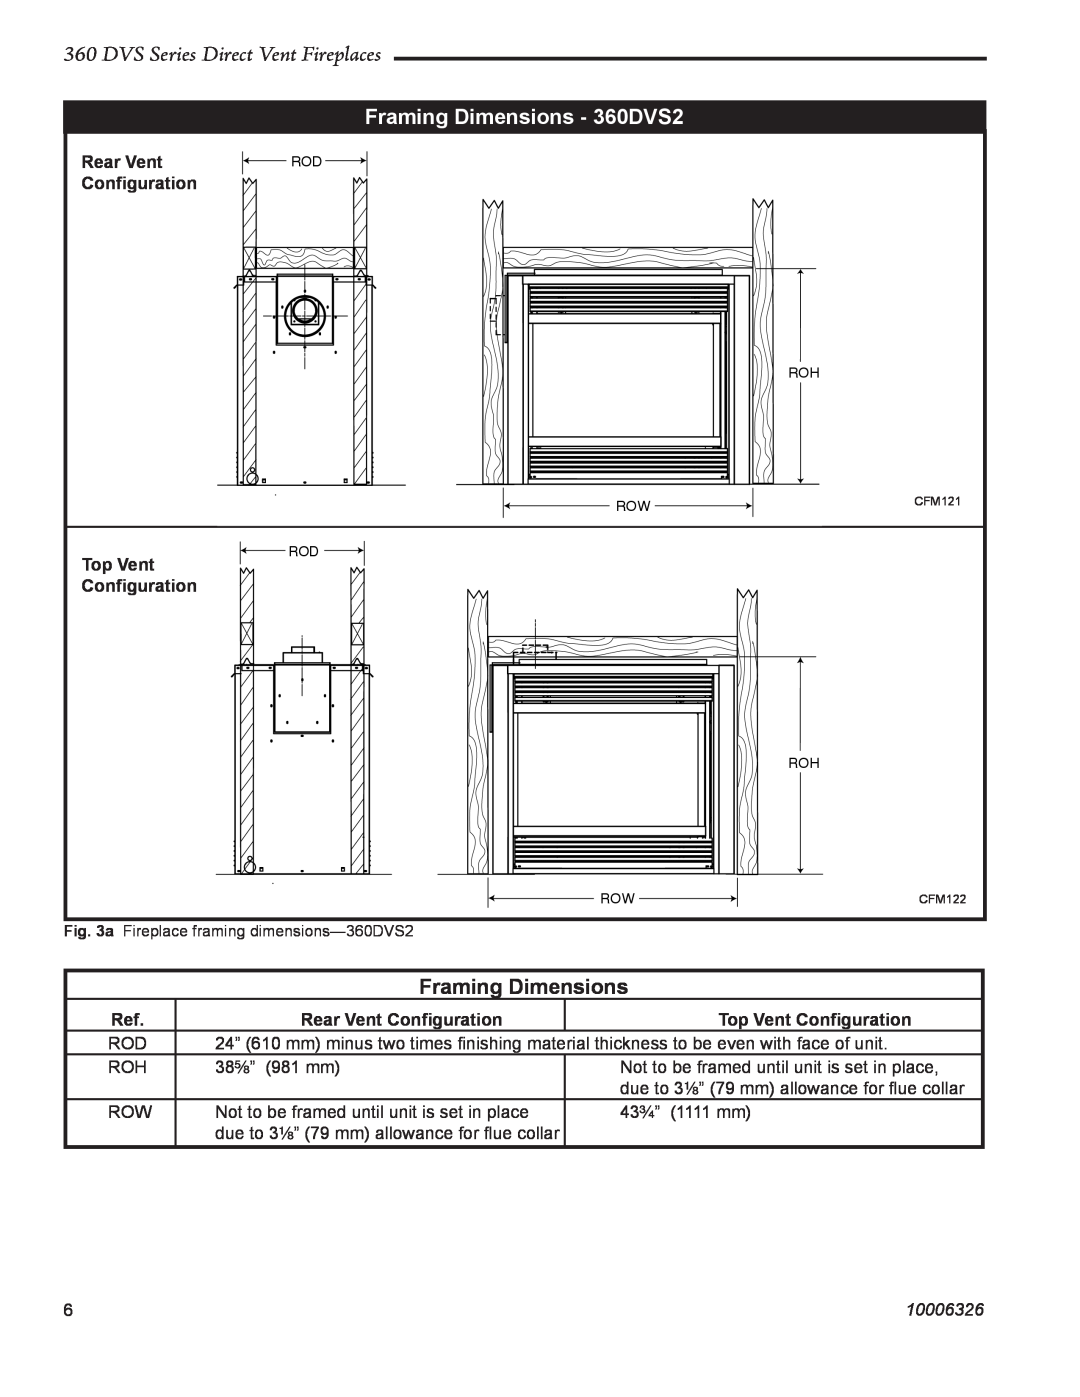 Vermont Casting 360DVSR Framing Dimensions - 360DVS2, DVS Series Direct Vent Fireplaces, Rear Vent, Conﬁguration, 10006326 